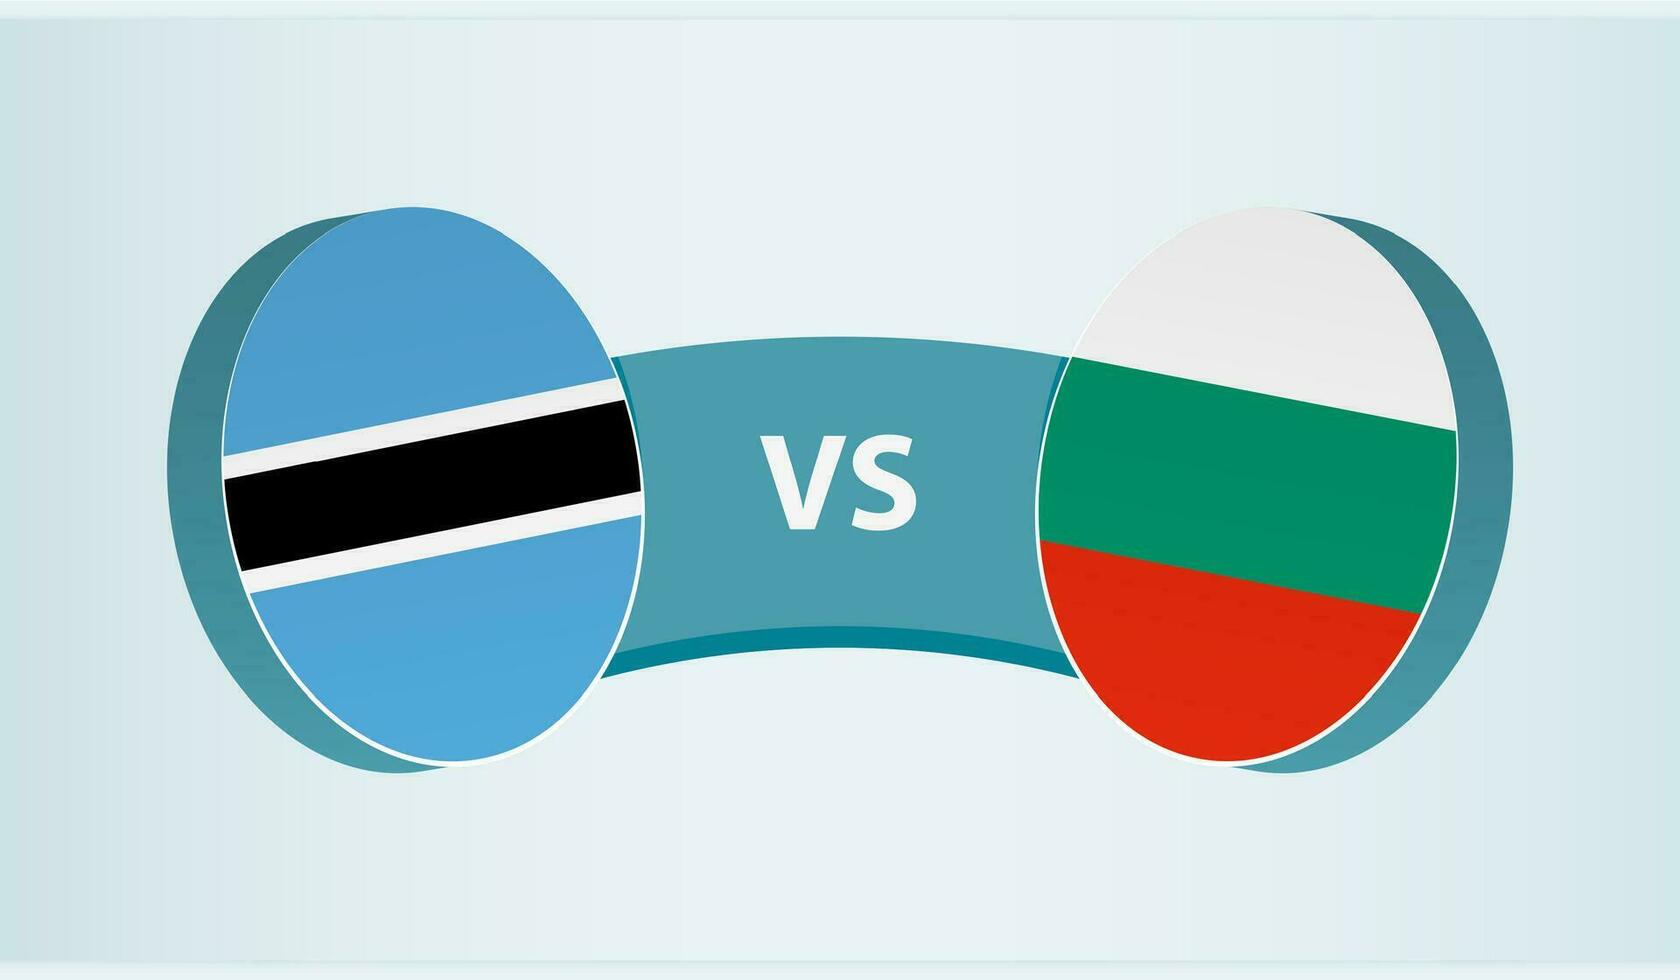 Botswana versus Bulgaria, team sports competition concept. vector